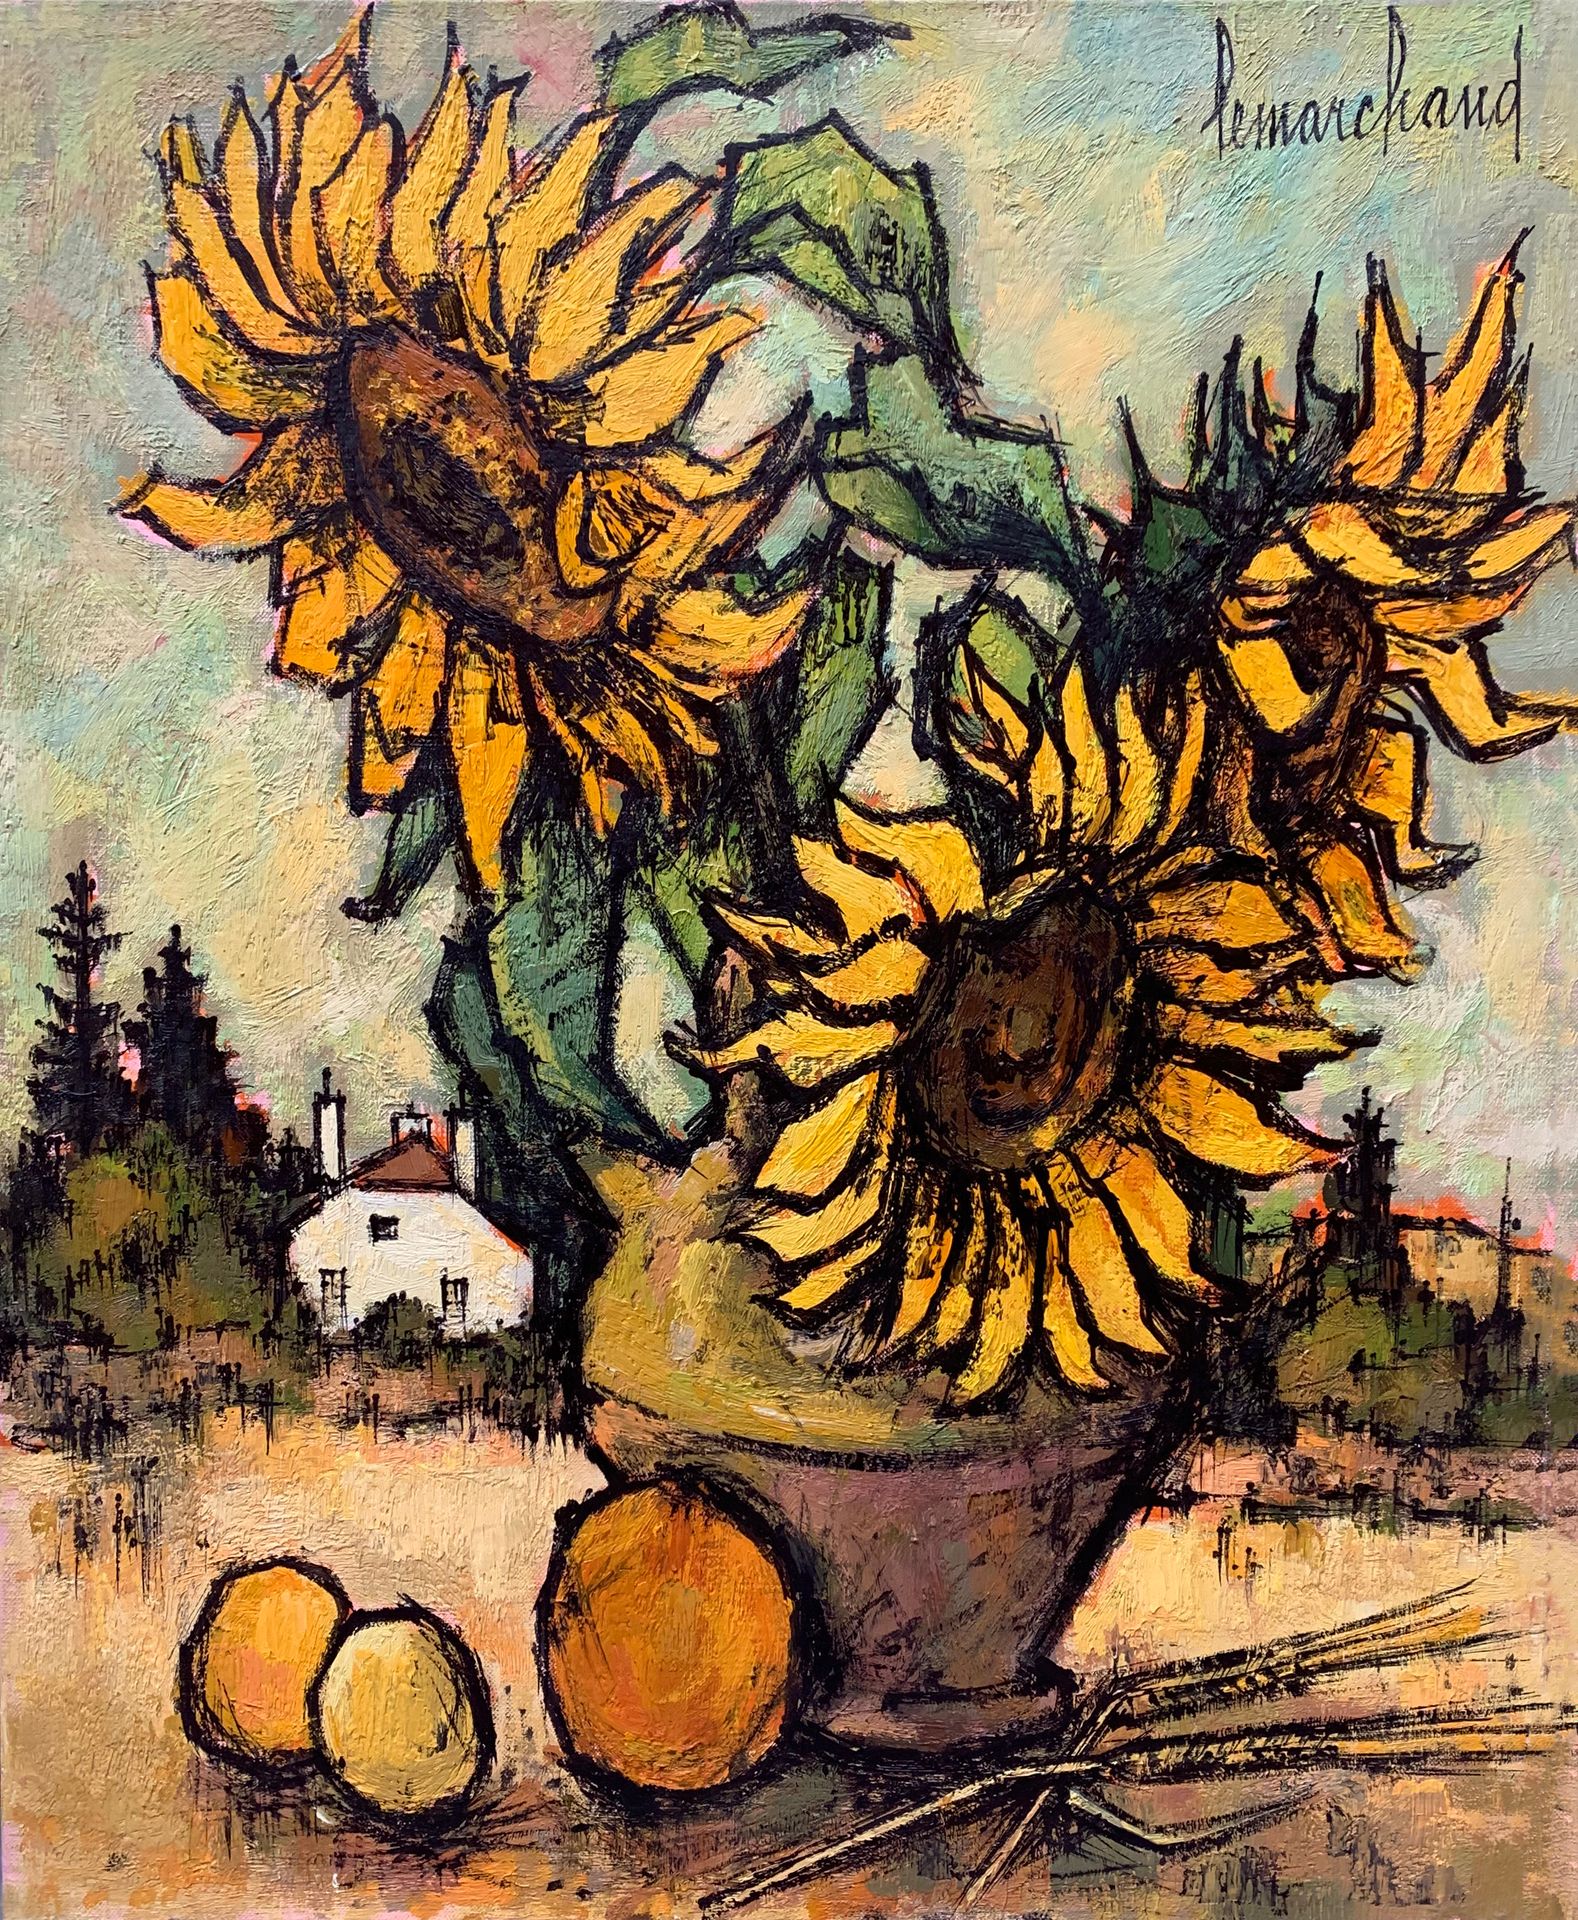 Null 皮埃尔-莱马赫德 (1906-1970)

那束向日葵

布面油画，右上角有签名

61 x 50厘米。